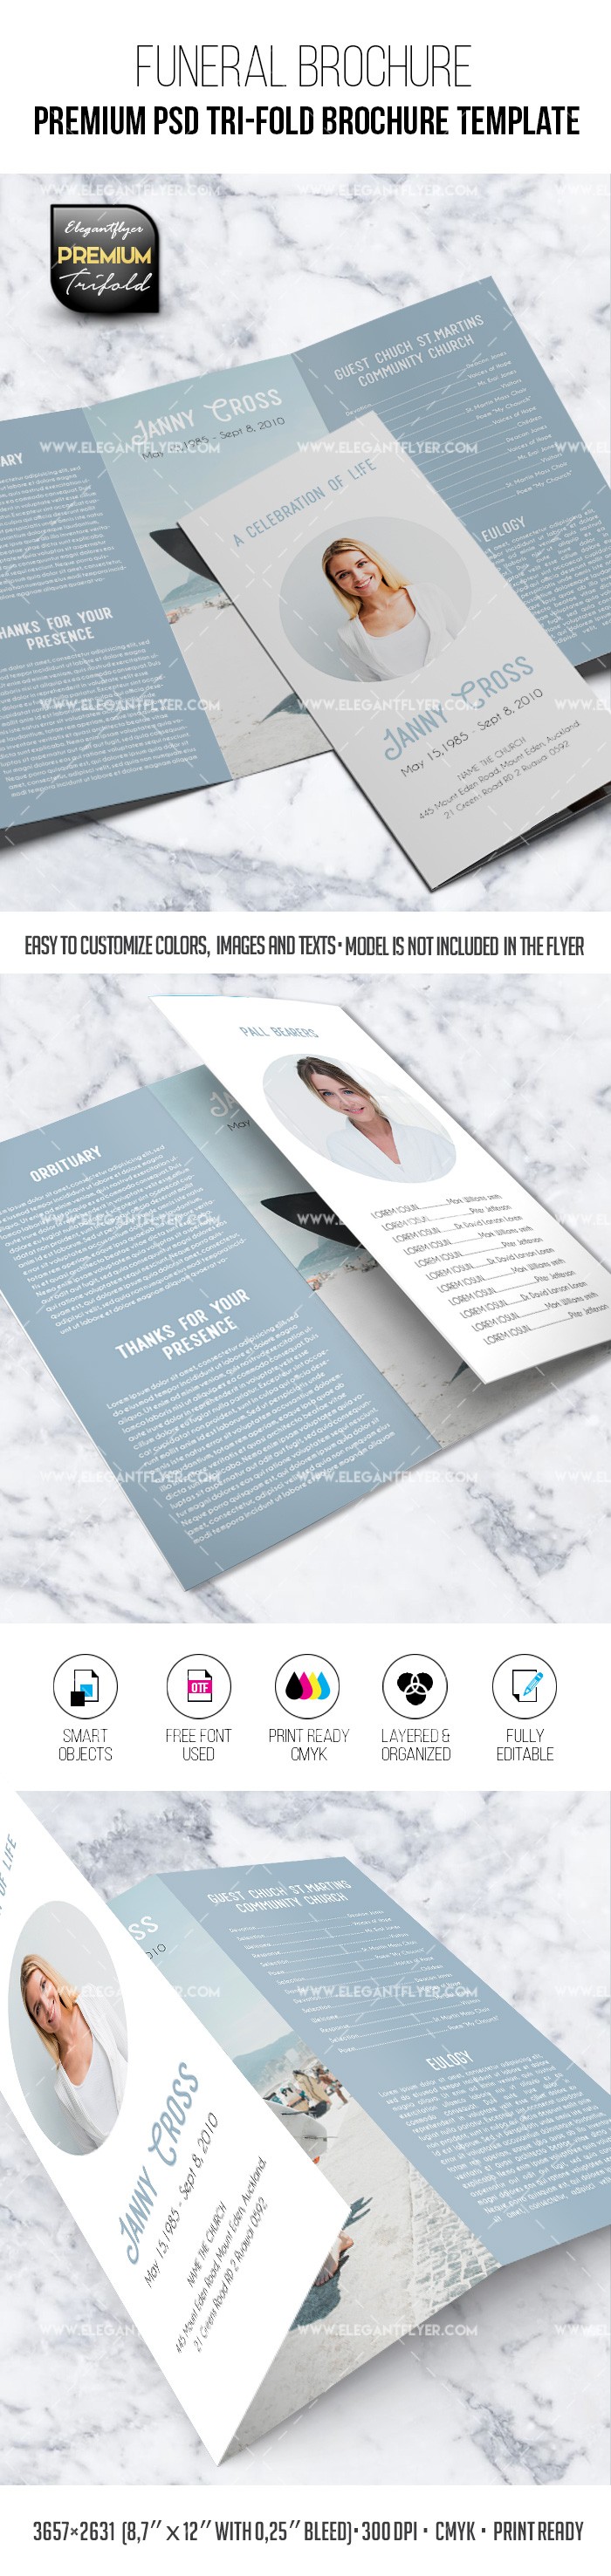 Funeral – Premium PSD Tri-Fold Brochure Template by ElegantFlyer